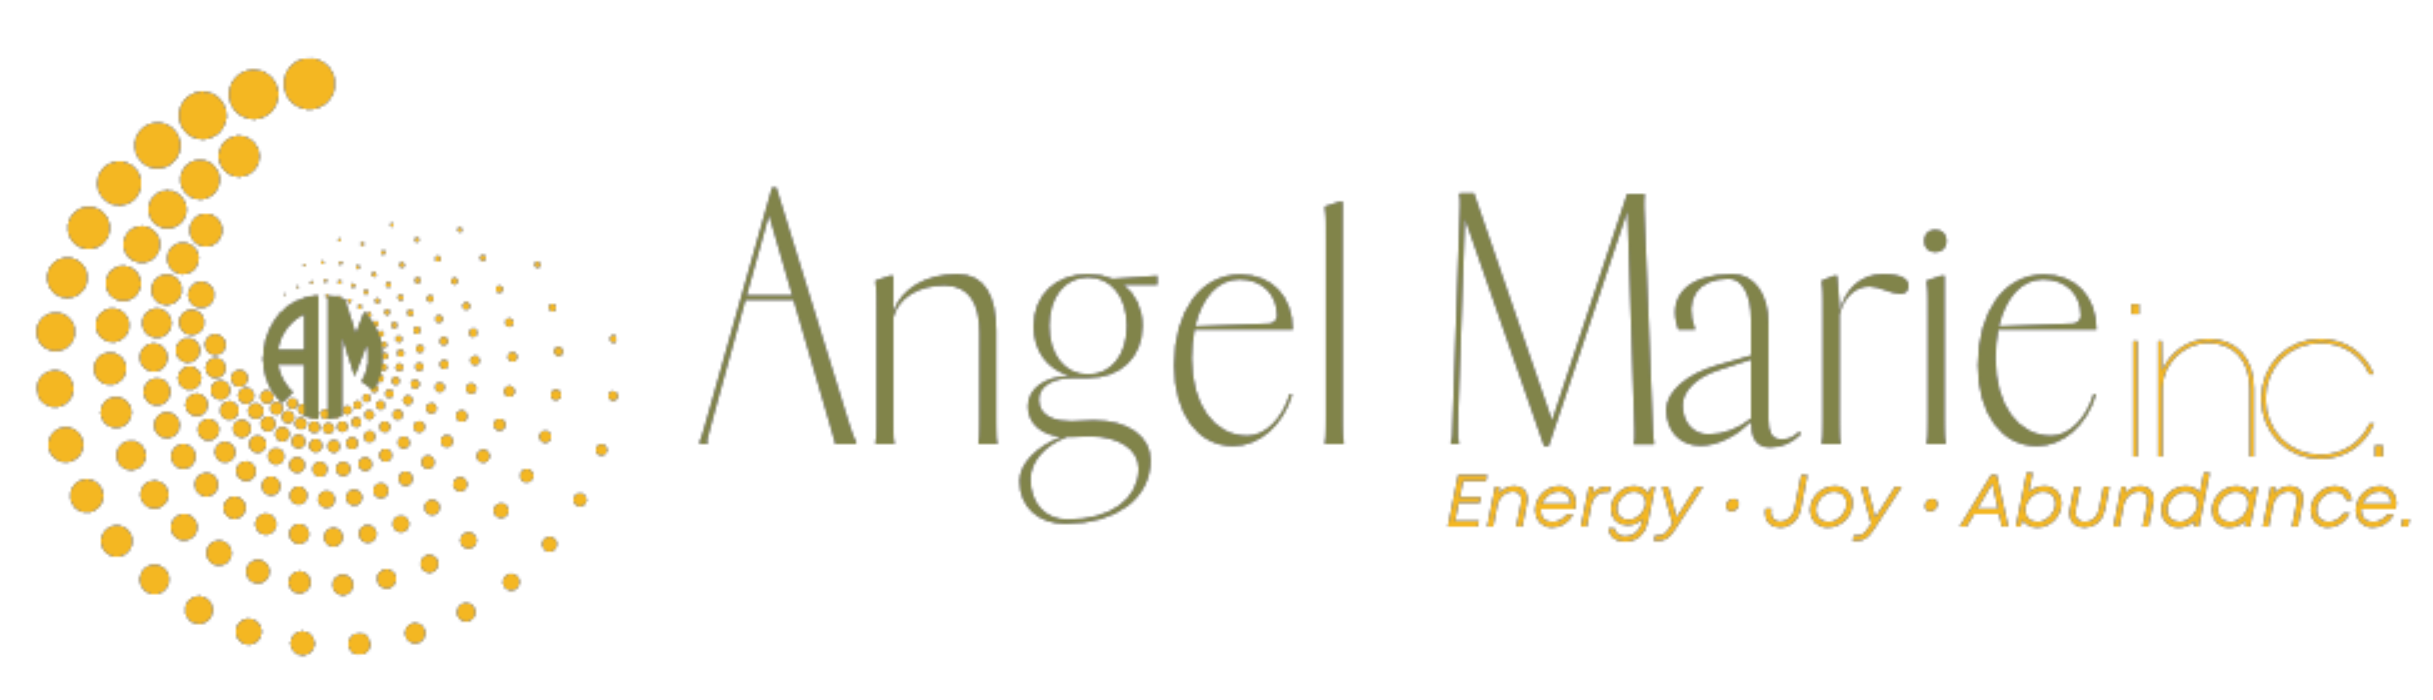 Angel Mari logo